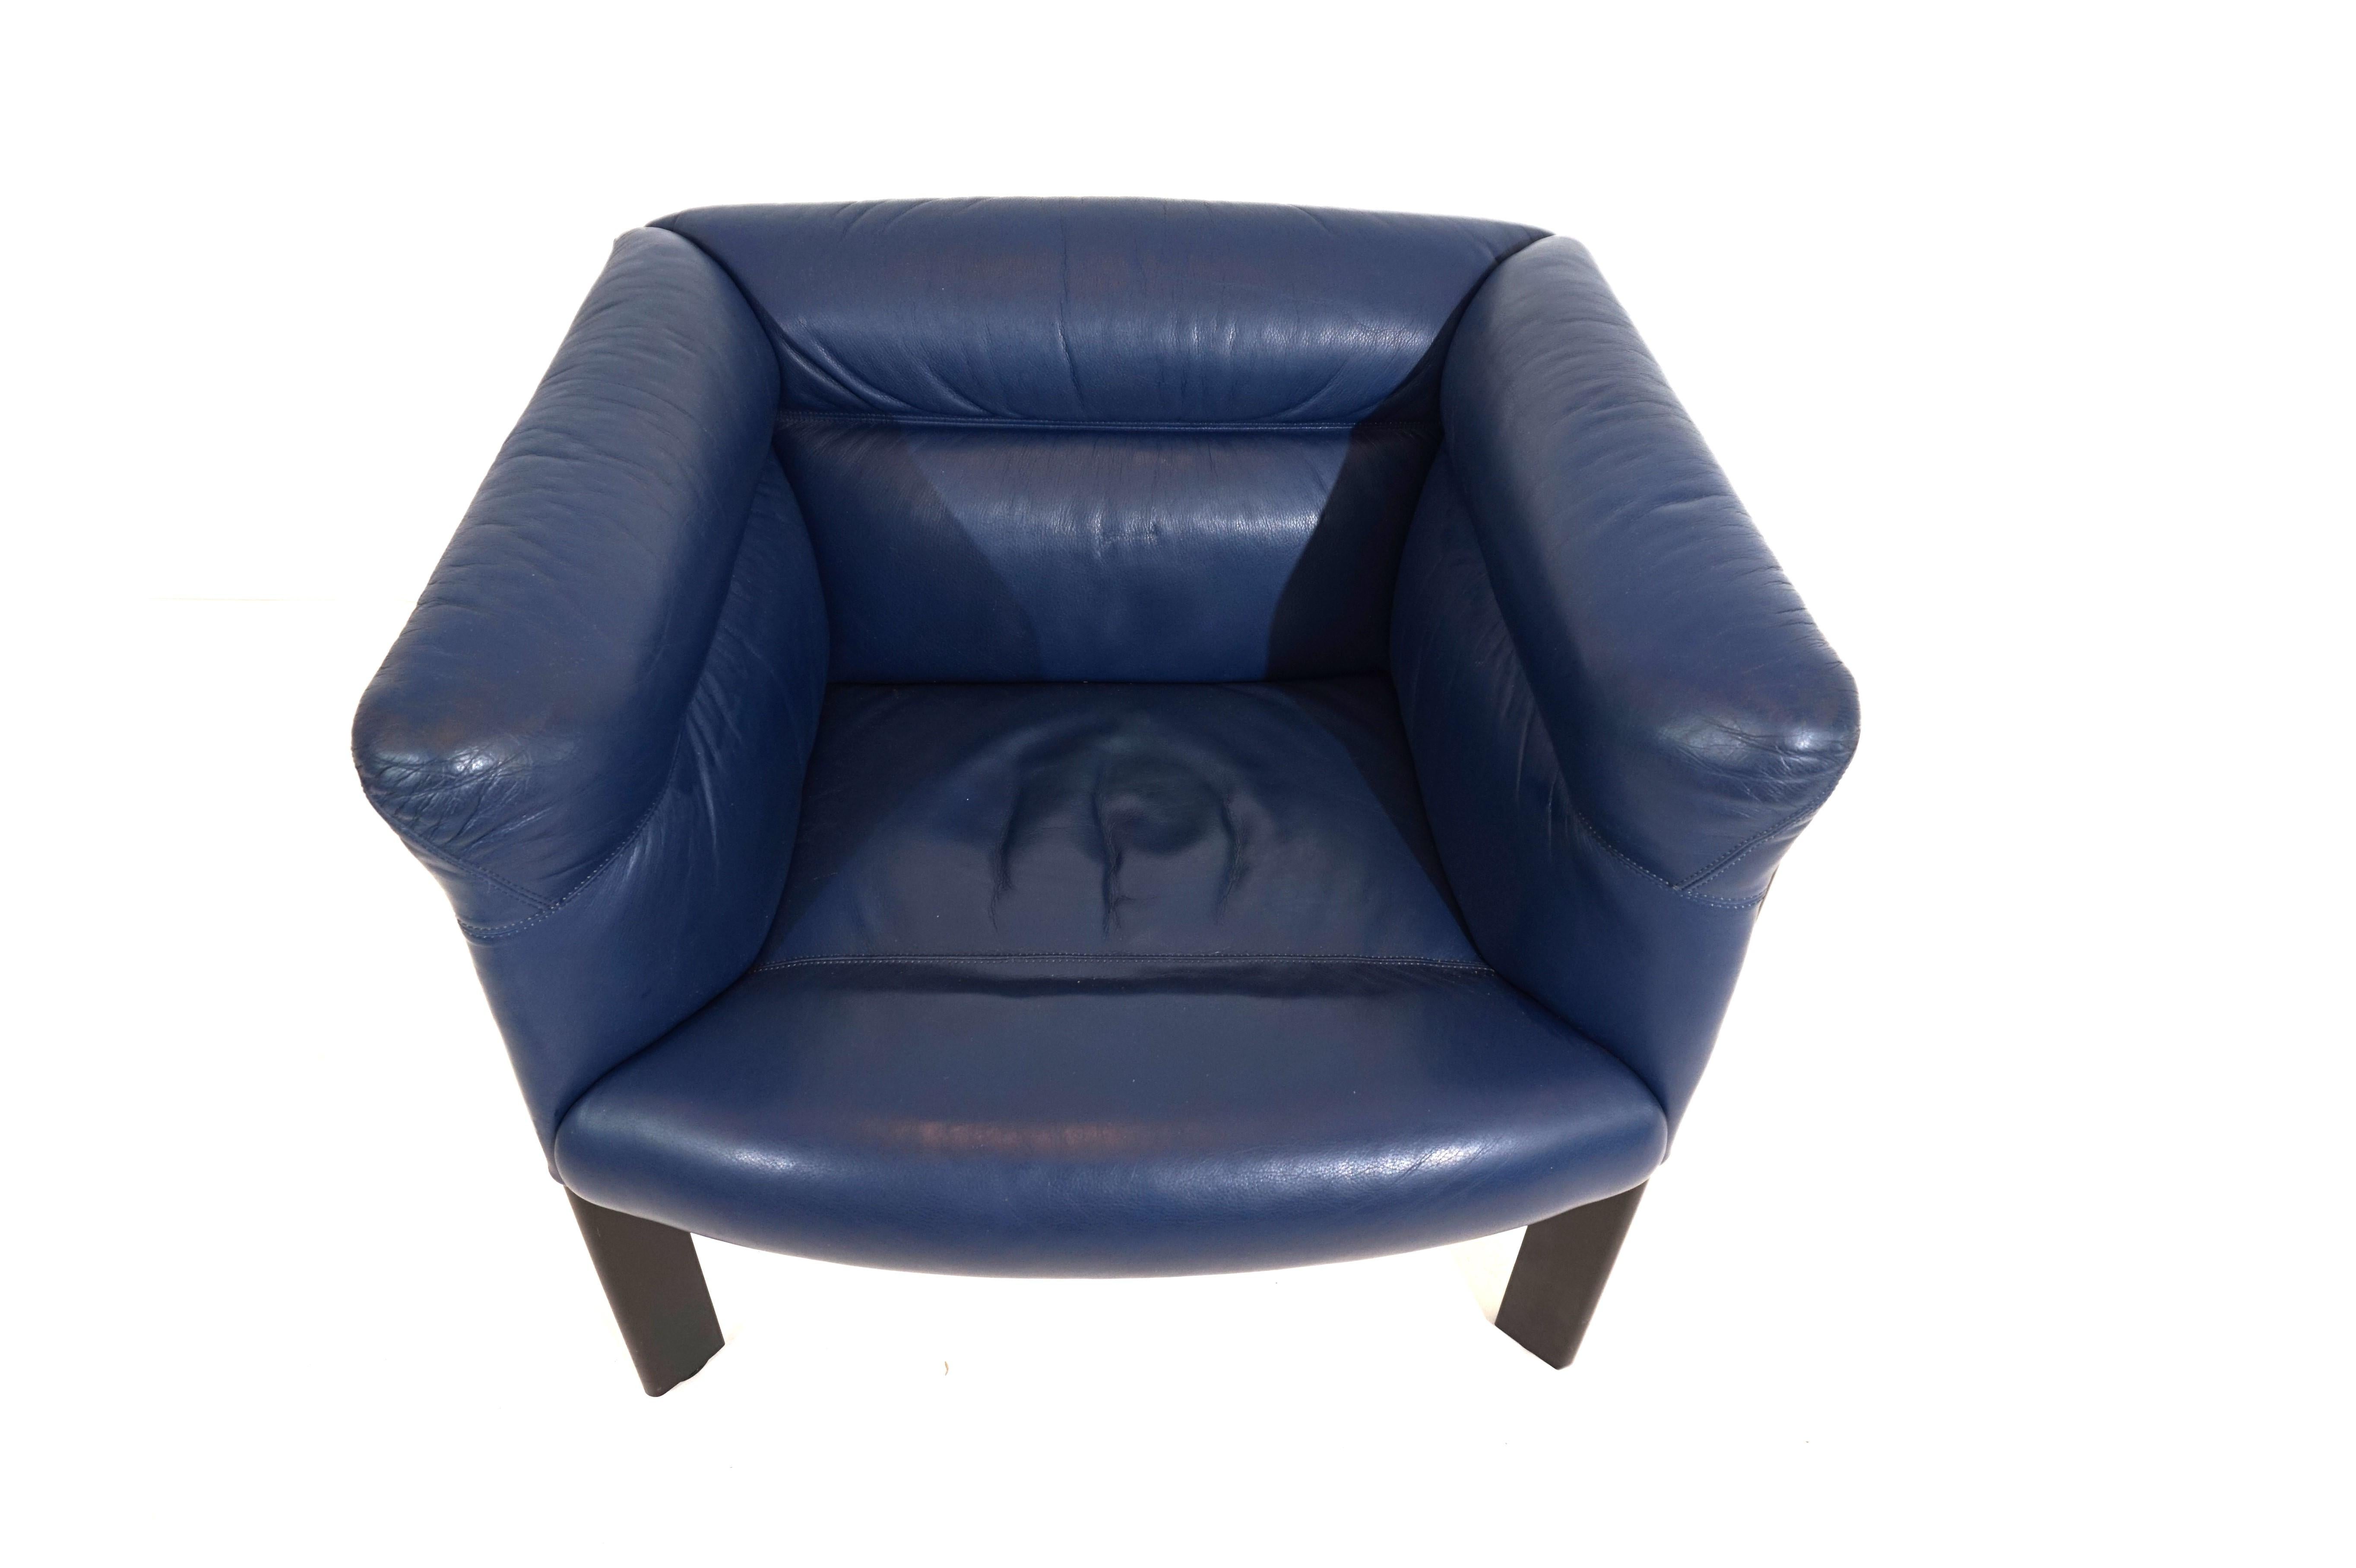 Poltrona Frau Interlude leather armchair by Marco Zanuso For Sale 4